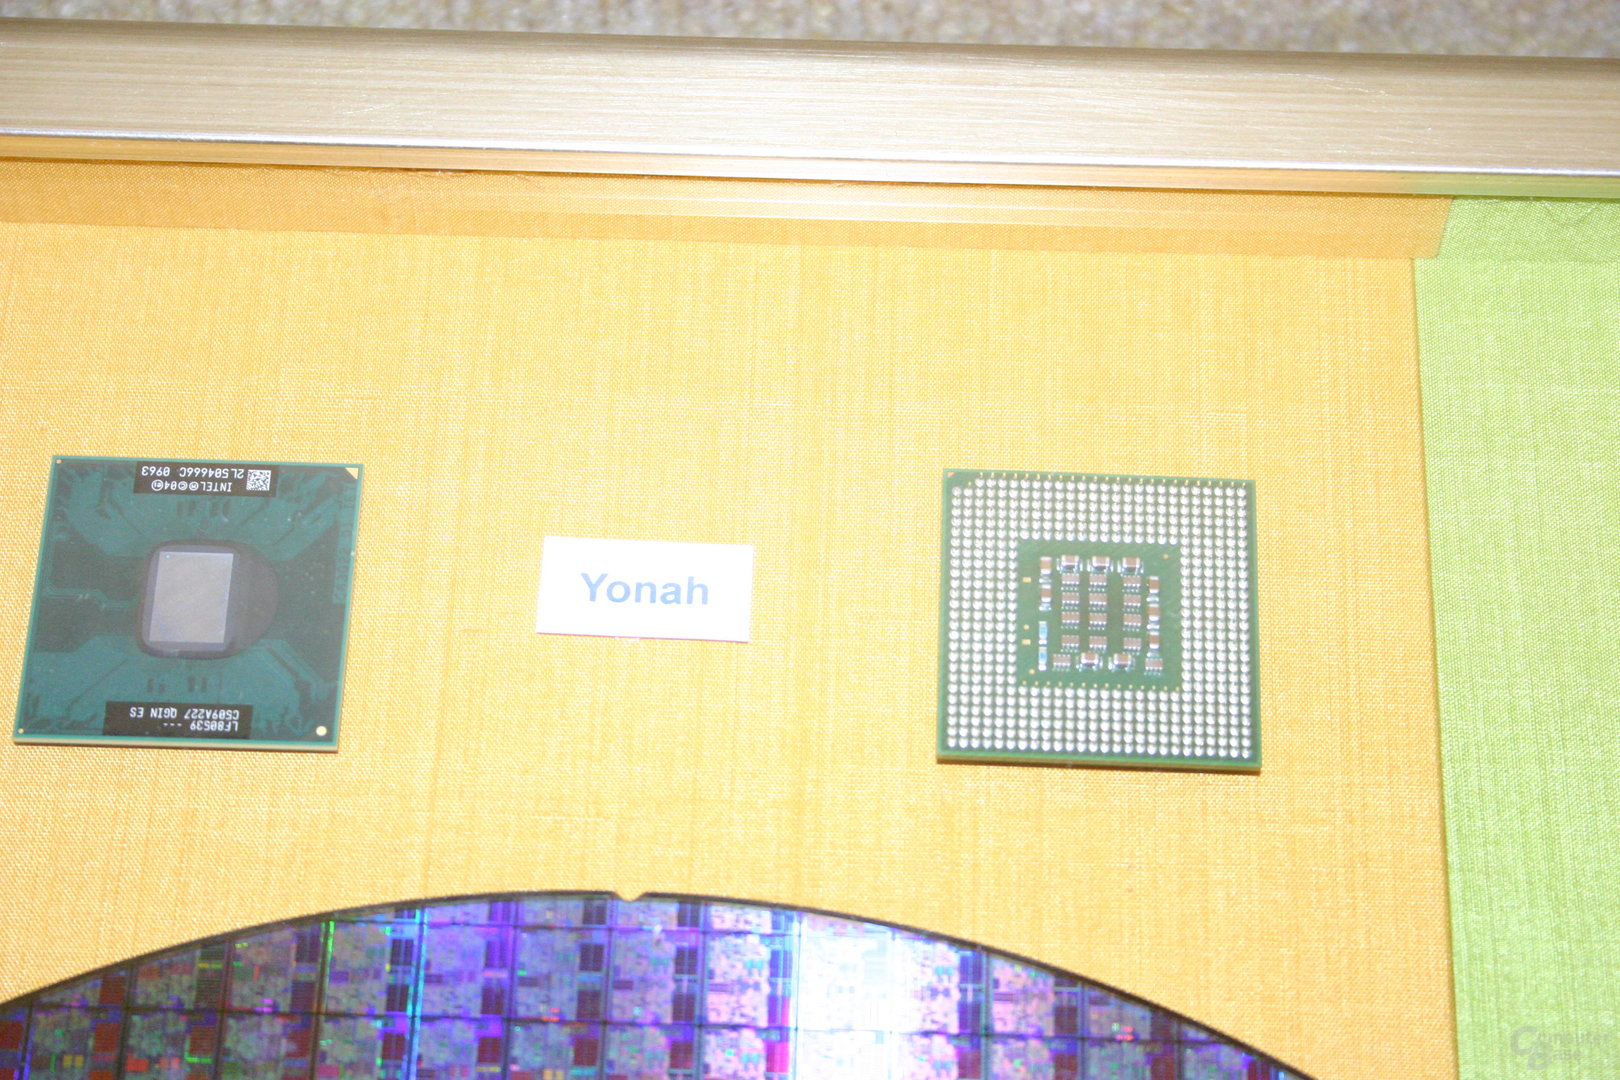 65 nm Intel Pentium M Yonah